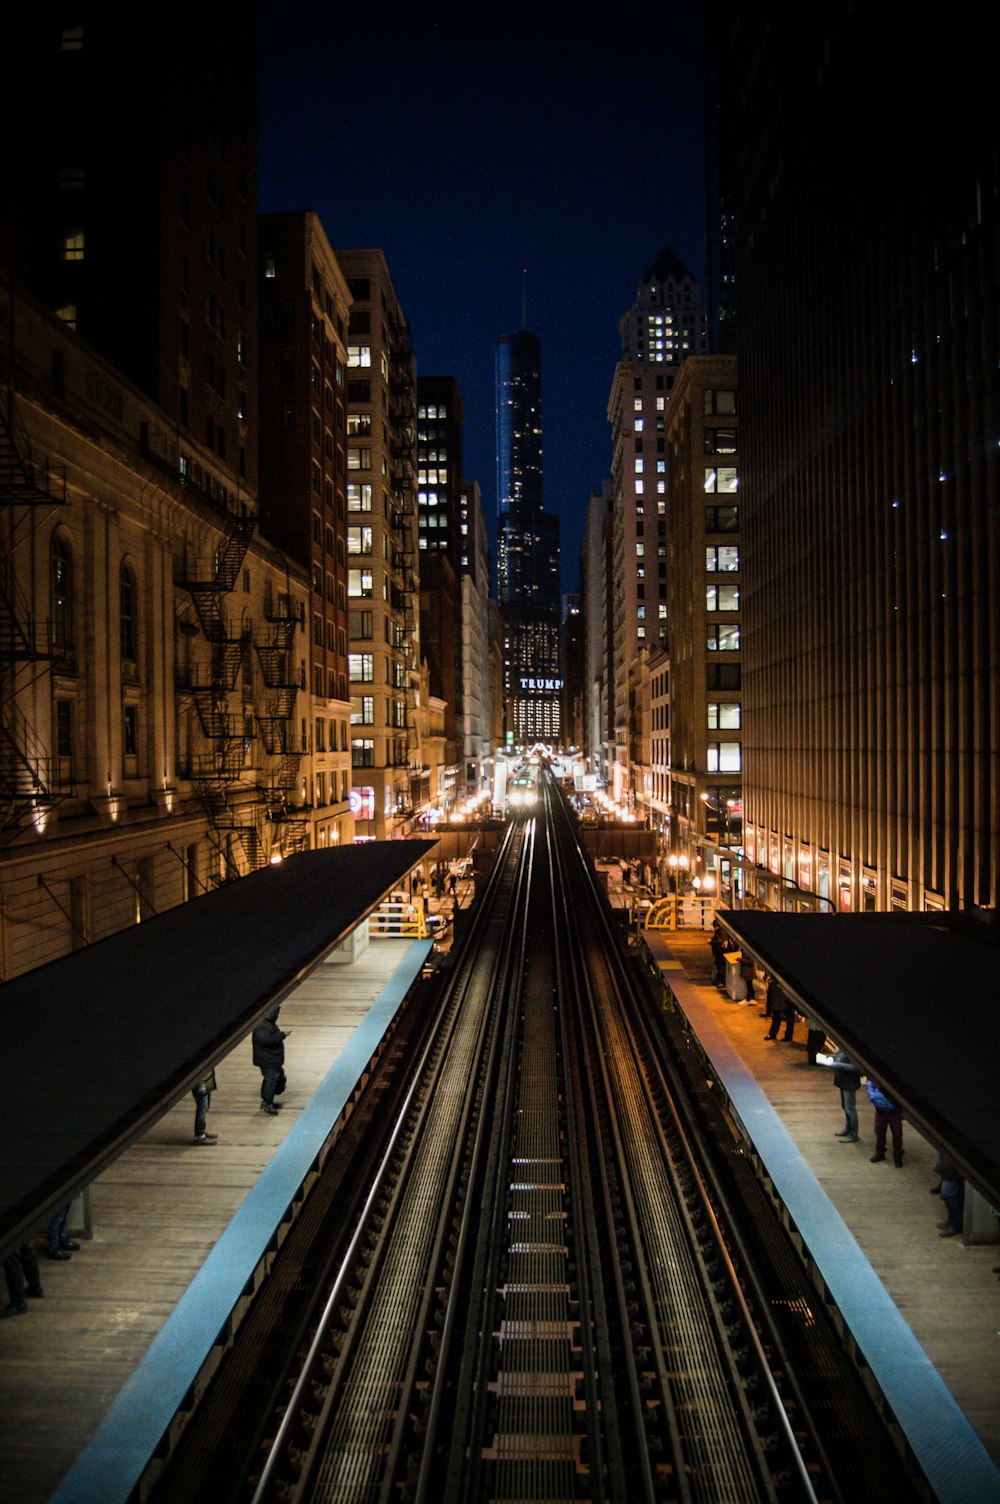 black metal train rail in between high rise buildings during night time